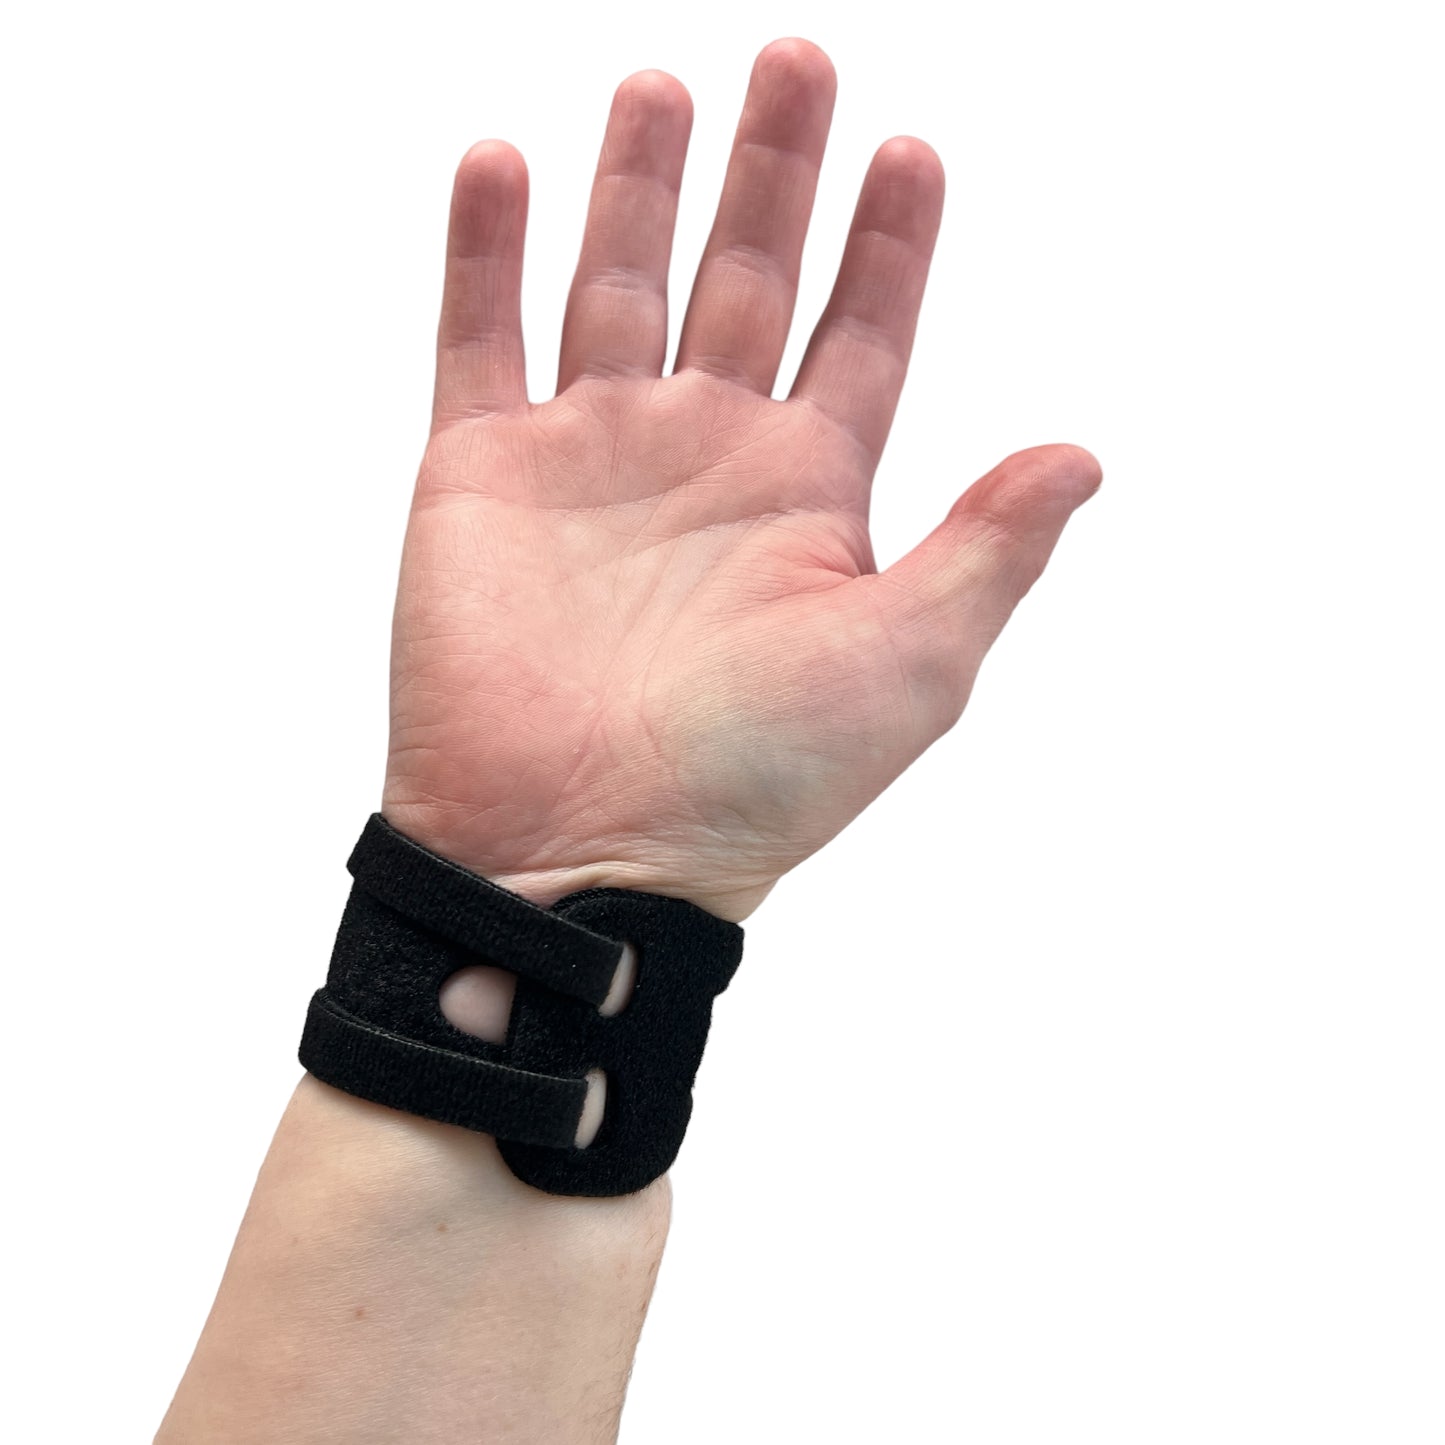 Rehab — TFCC Wrist Brace